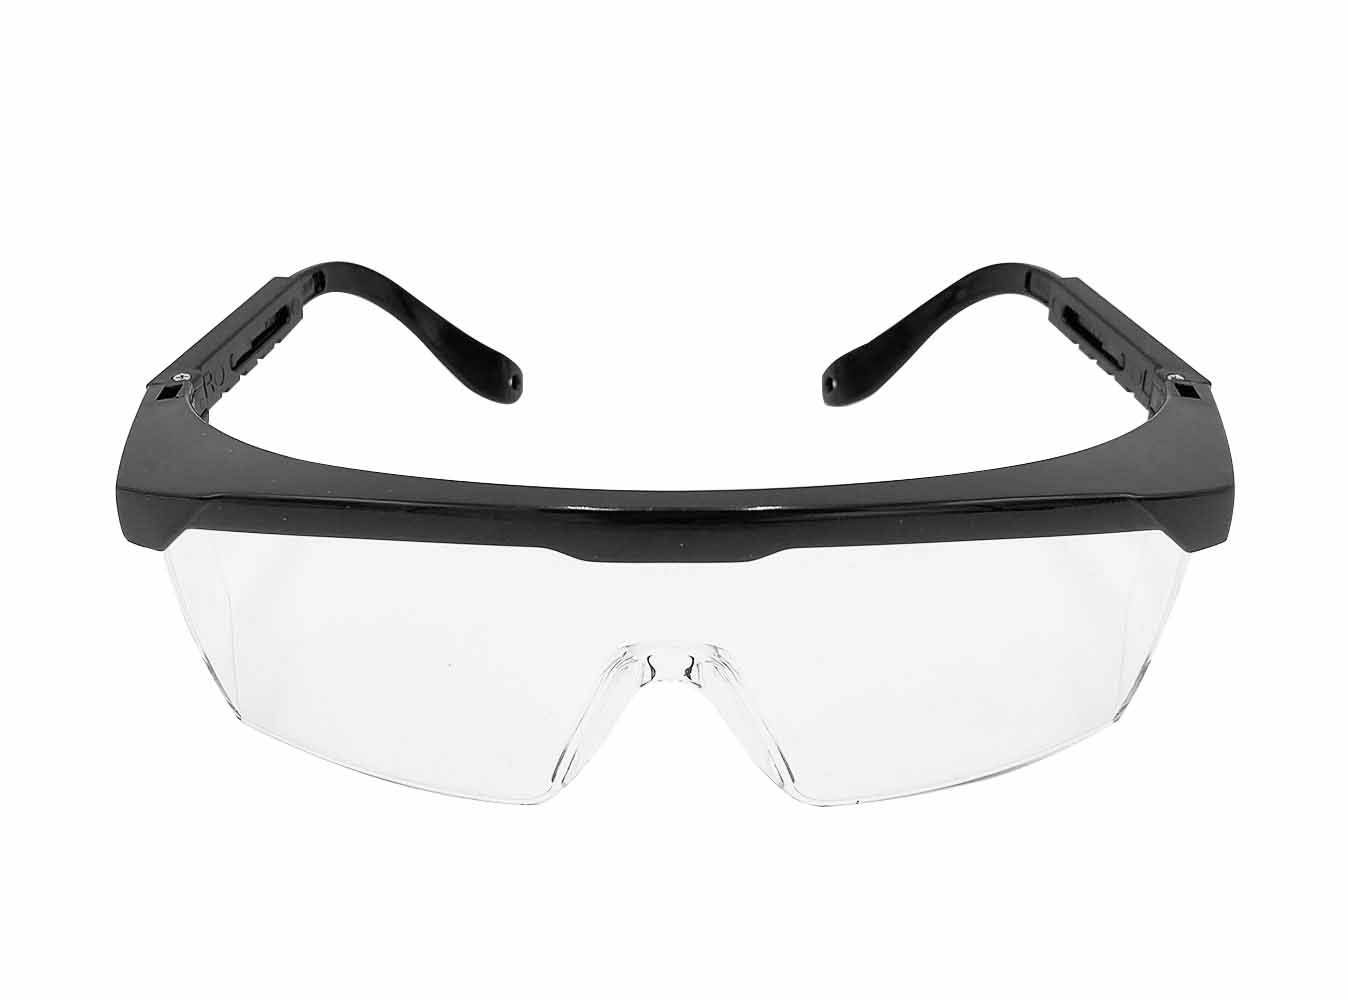 Zenport Safety Glasses SG2612 UV Coated Lens, Adjustable Temples, Protective Eye Wear